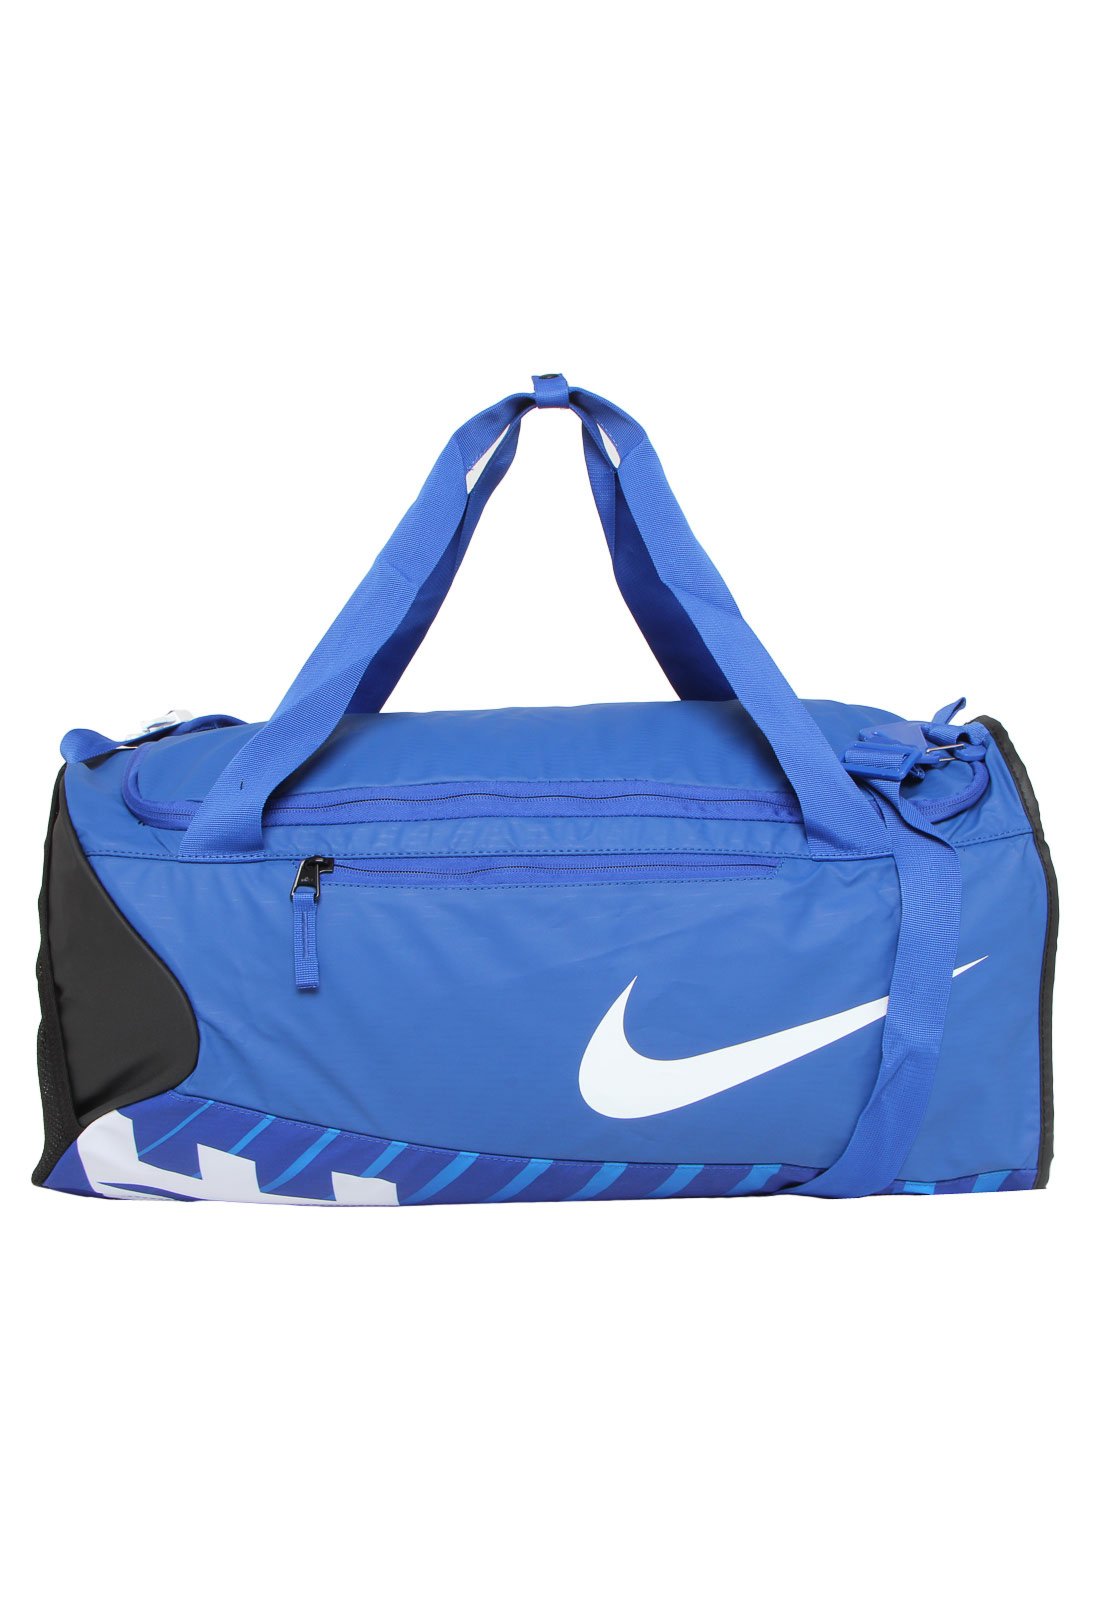 Bolsa Nike ADPT CRSSBDY Azul Compre Agora | Kanui Brasil